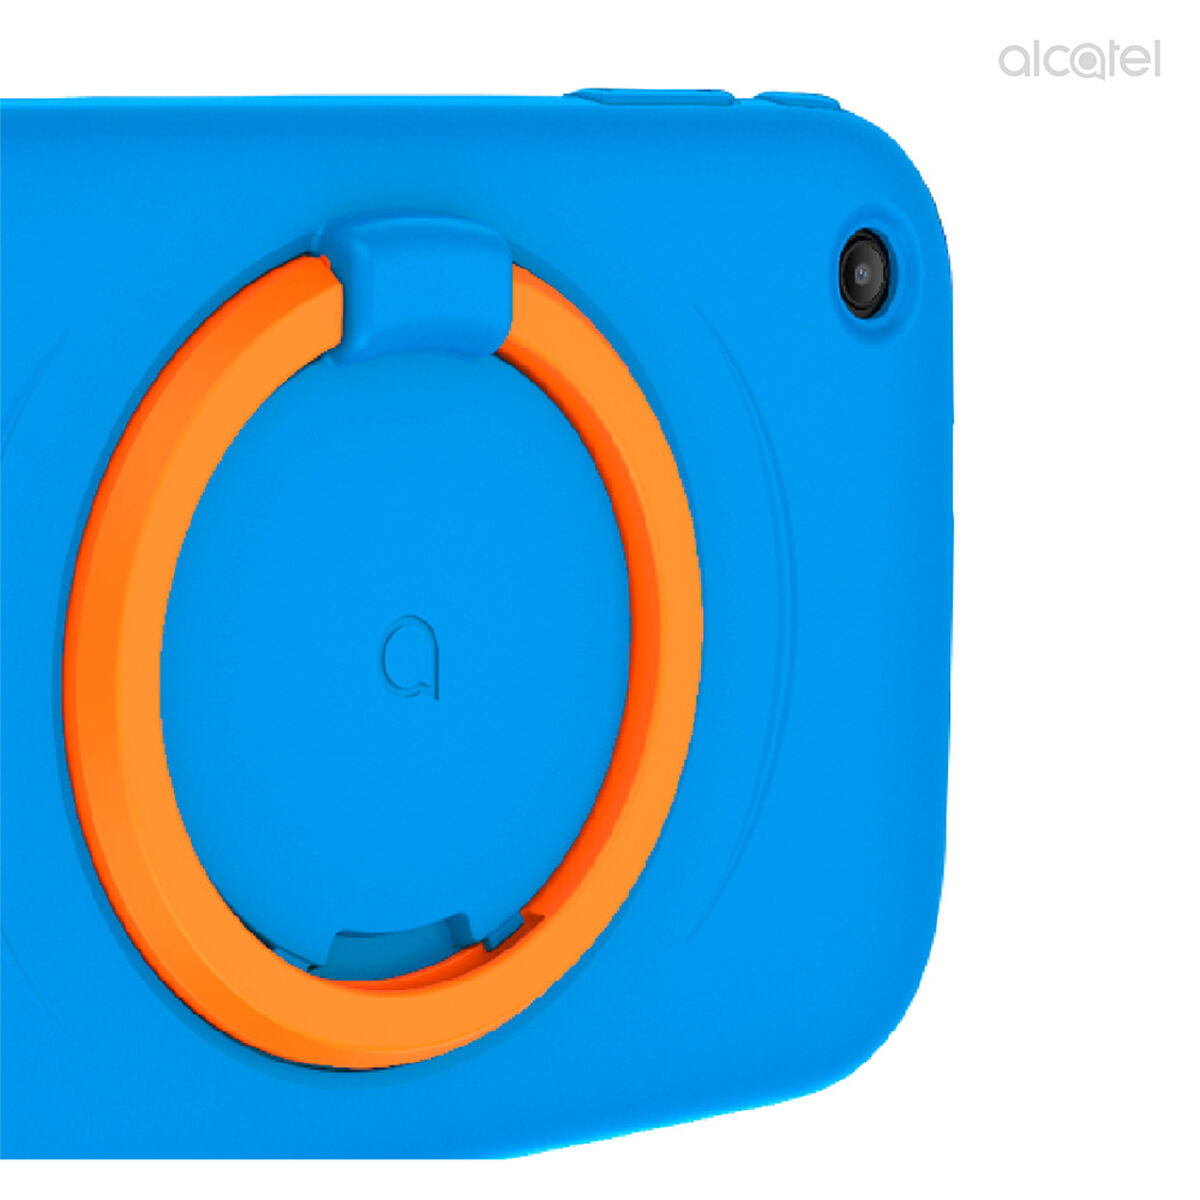 Tablet Alcatel Kid 7 Quad Core 1GB 16GB 7" + Carcasa de Goma Azul